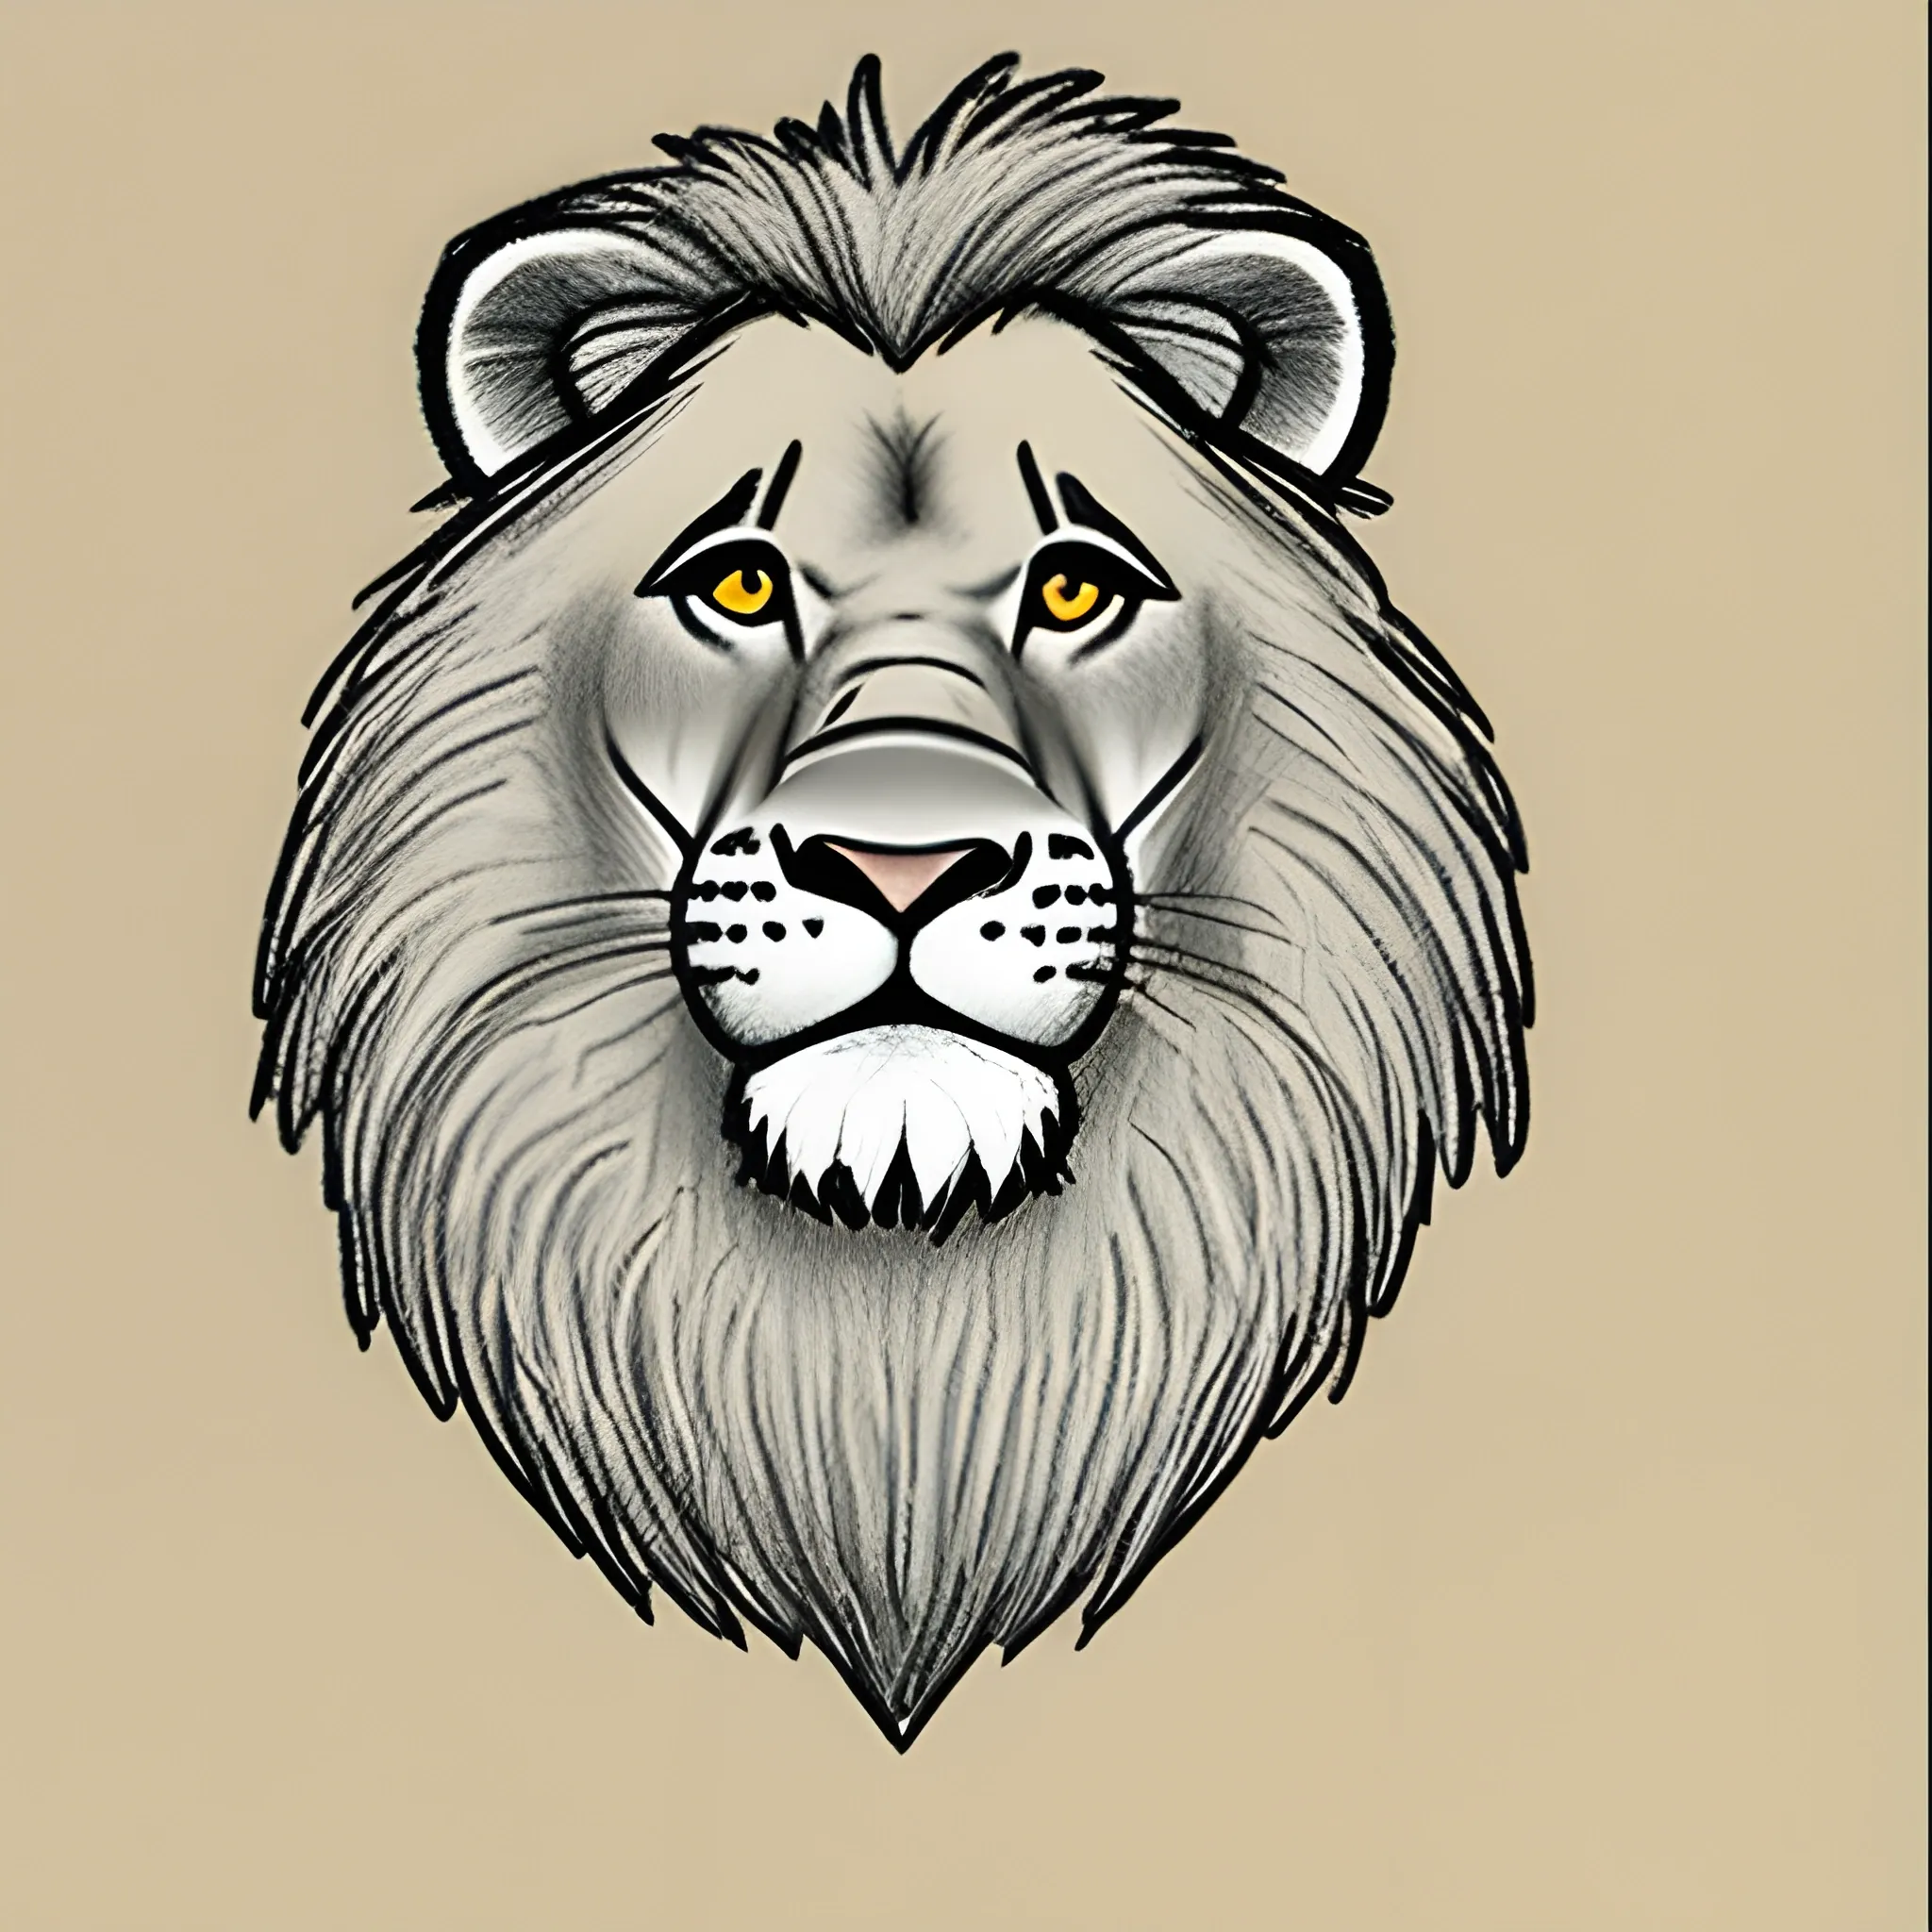 Inspiring Lion Illustration: From Fierce to Cute Cartoon Lions | Envato  Tuts+